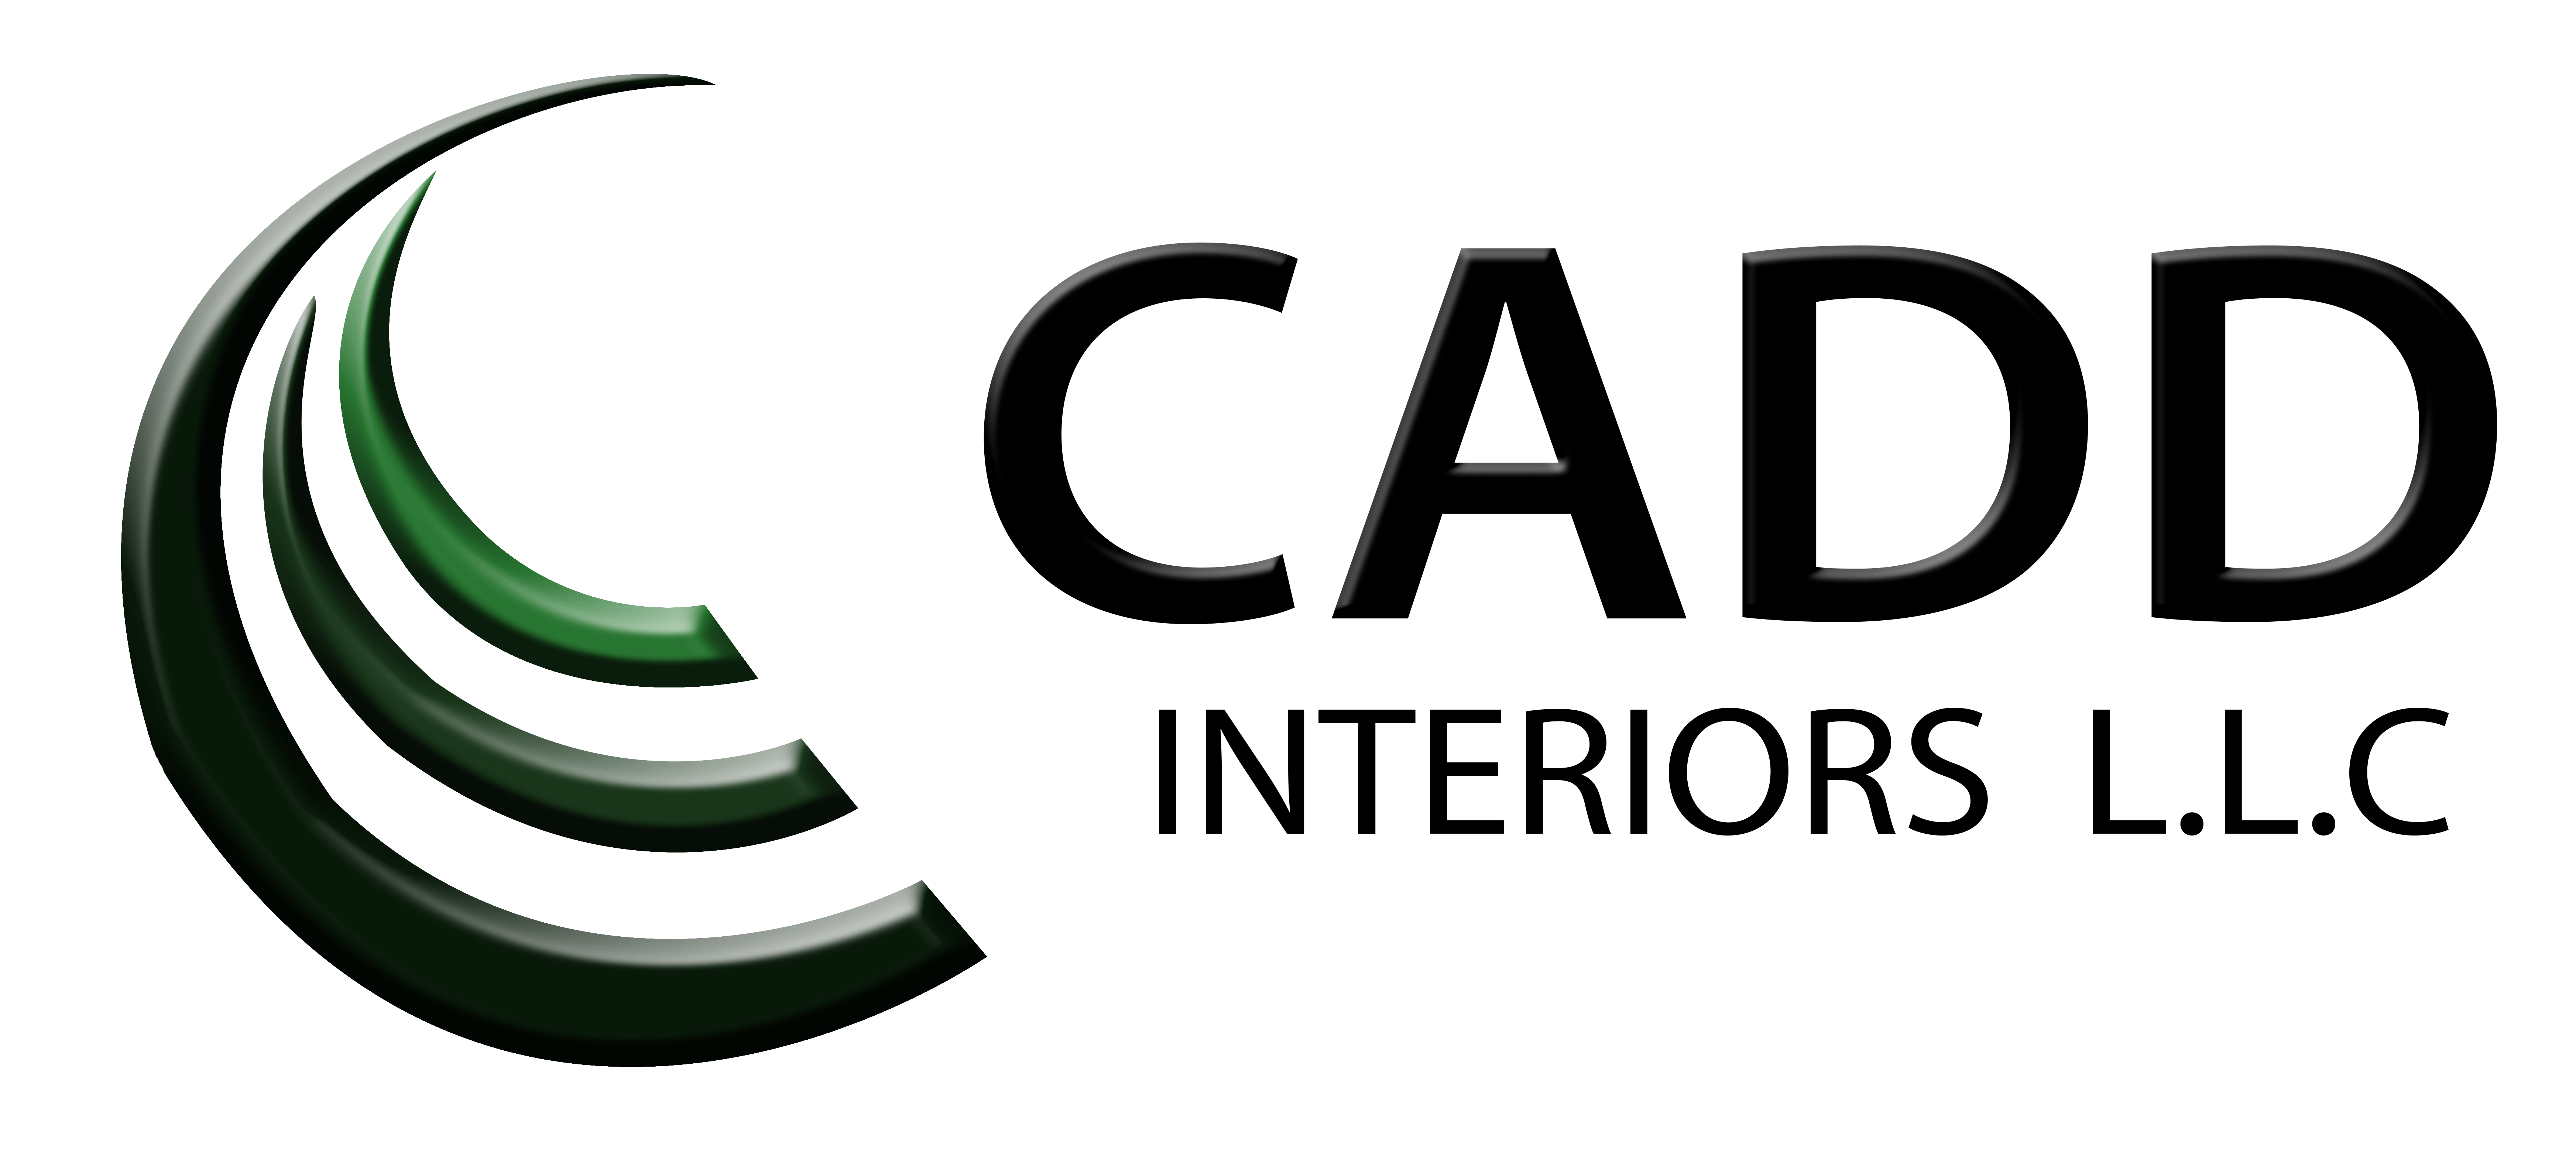 CADD Logo - Design | Dubai | CADD Interiors